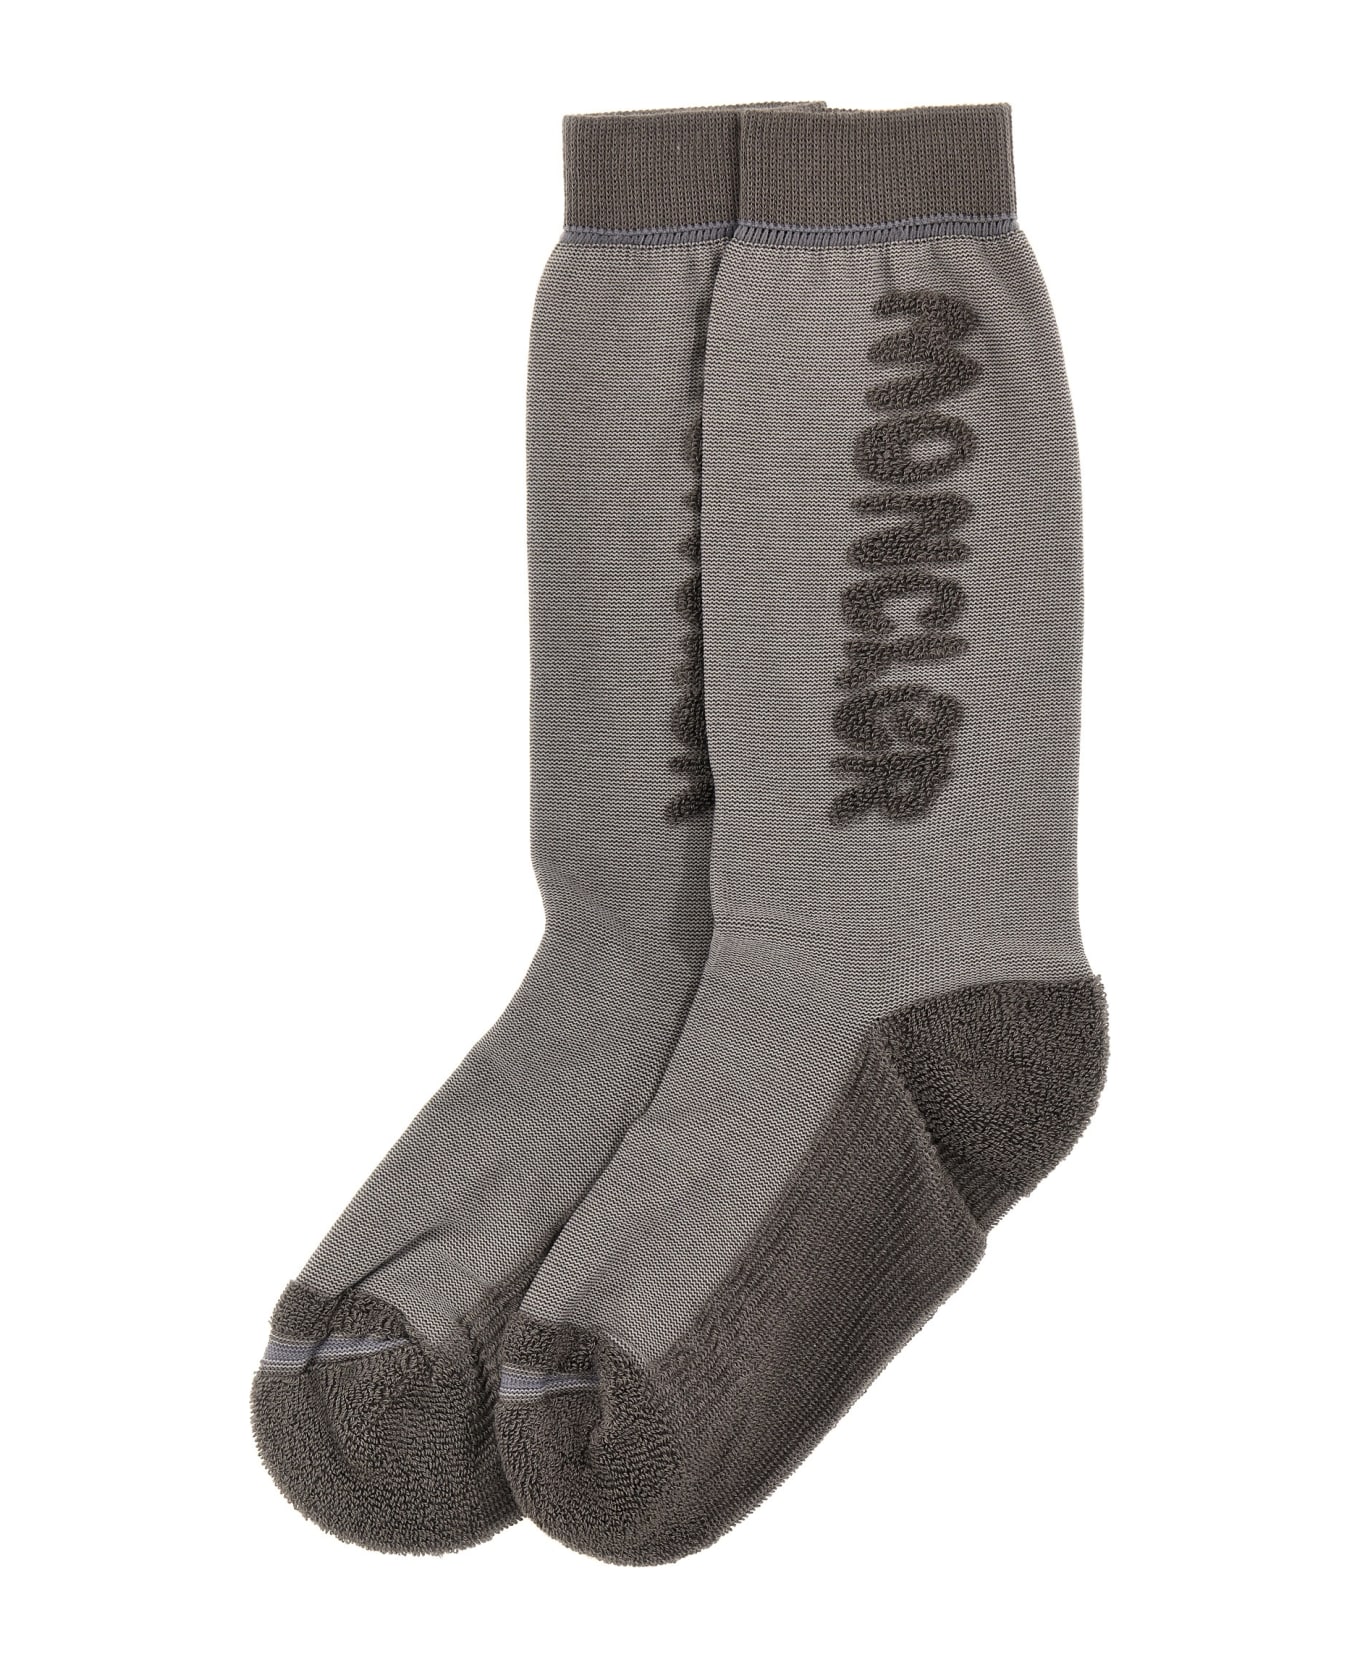 Moncler Genius X Salehe Bembury Socks - Gray 靴下